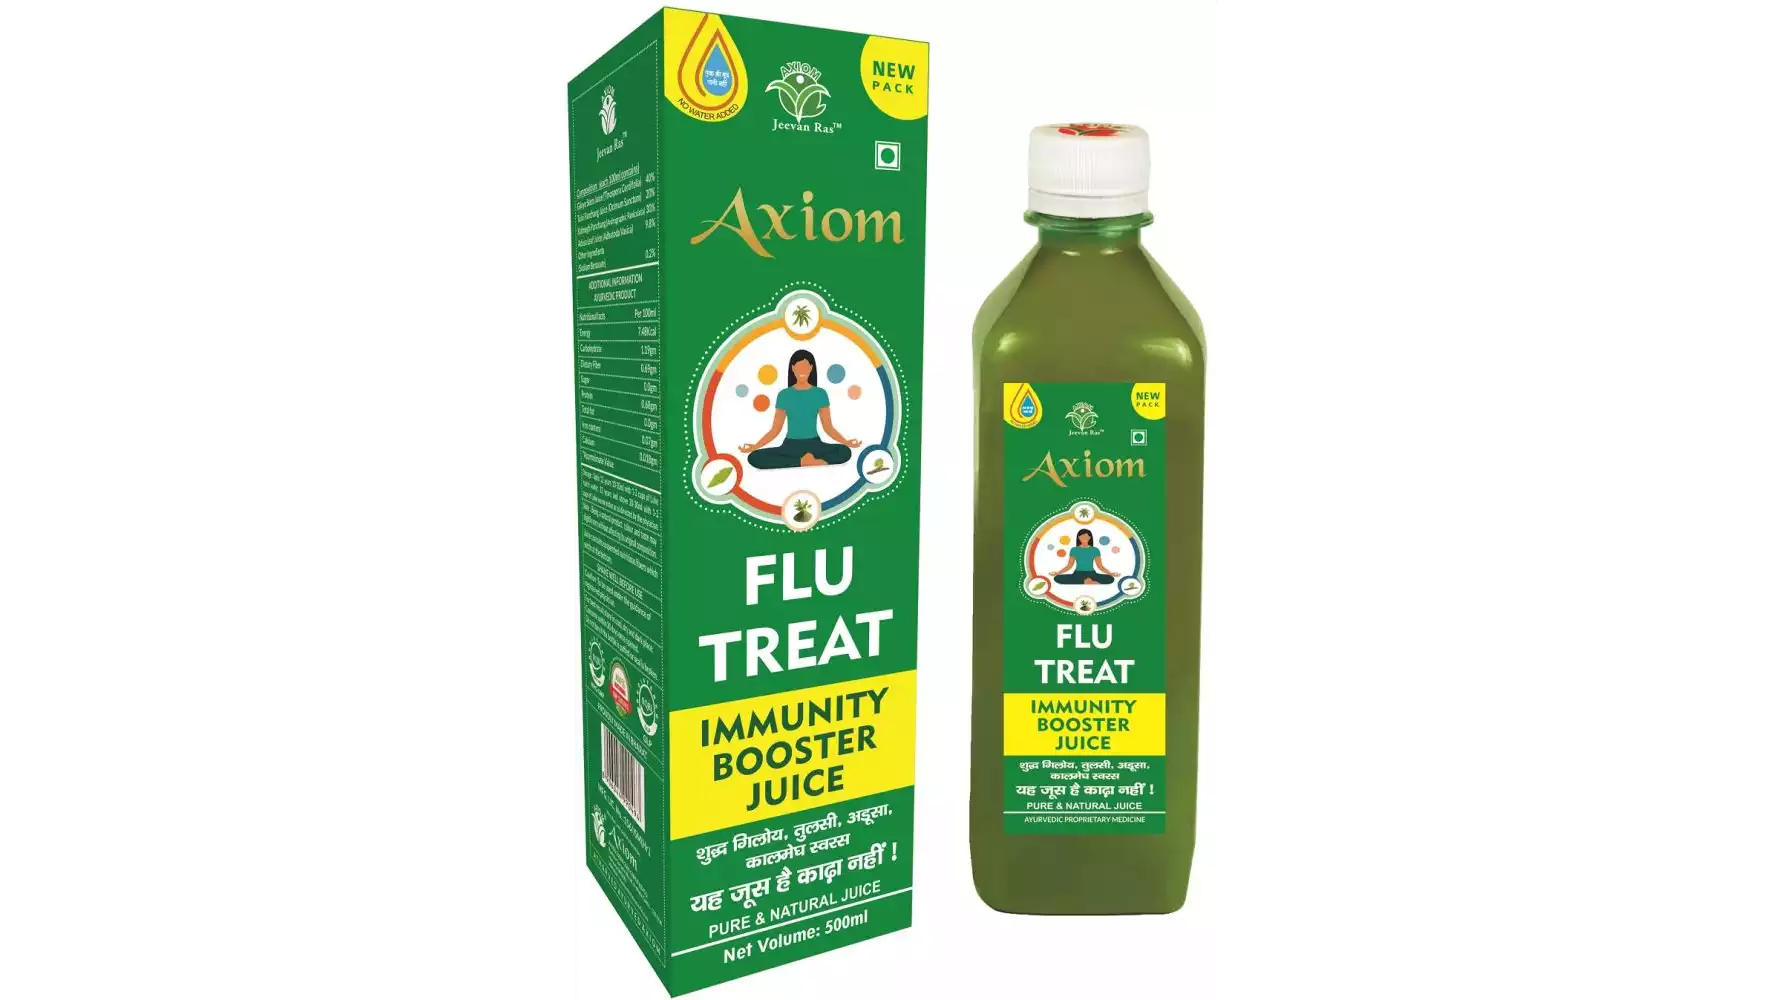 Axiom Immunity Booster Flu treat Juice (500ml)